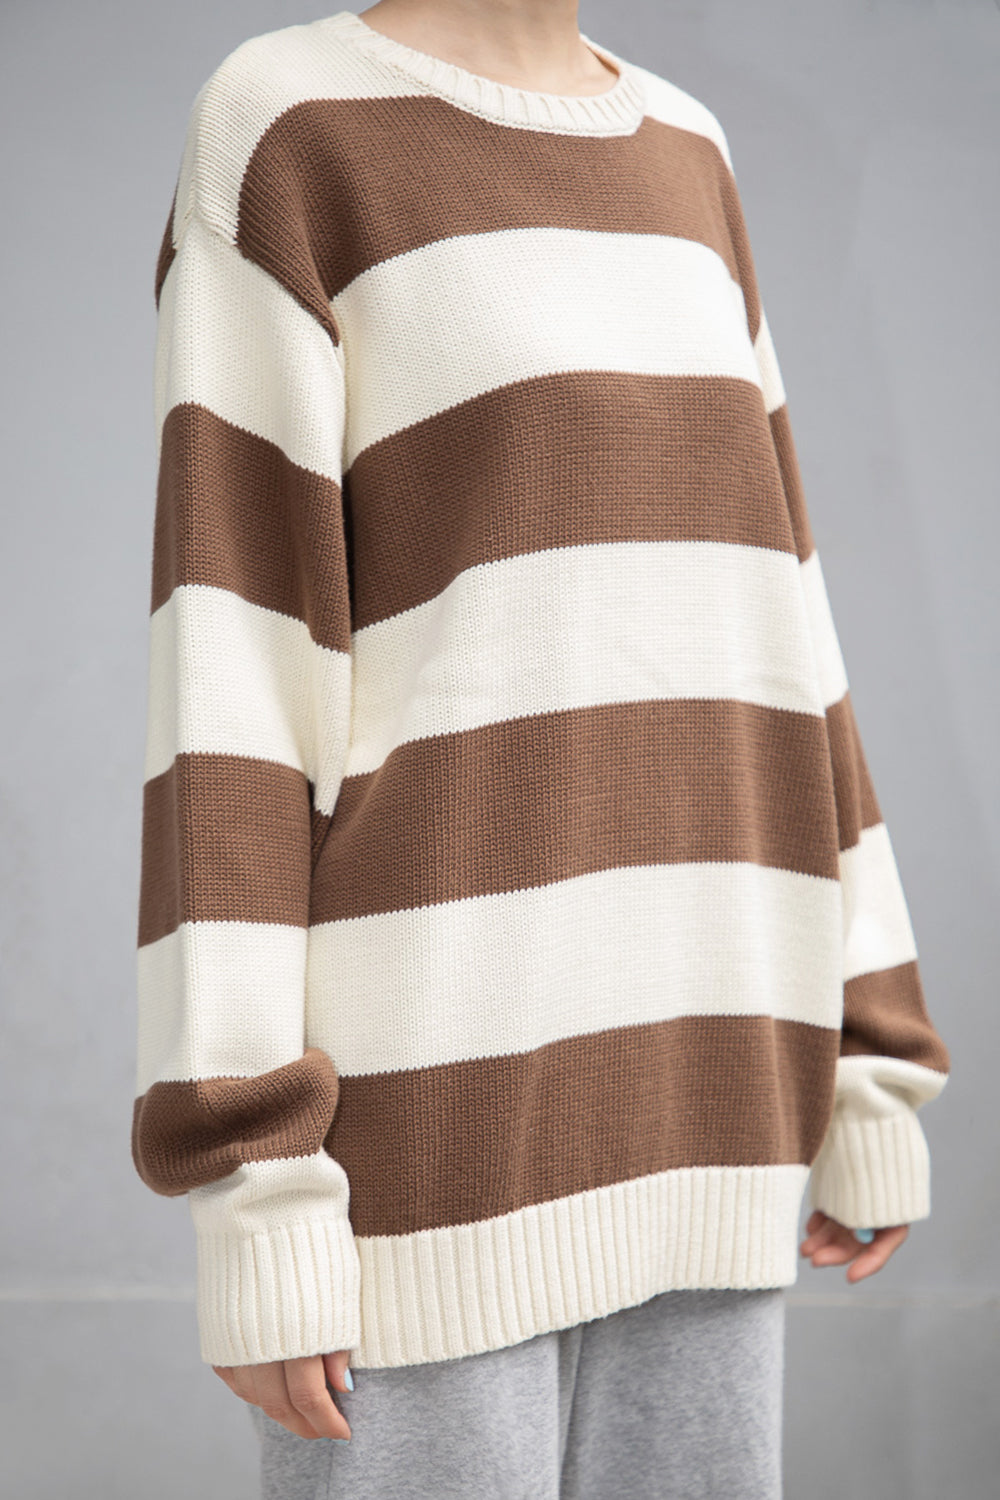 Brown Cream Stripe / Oversized Fit